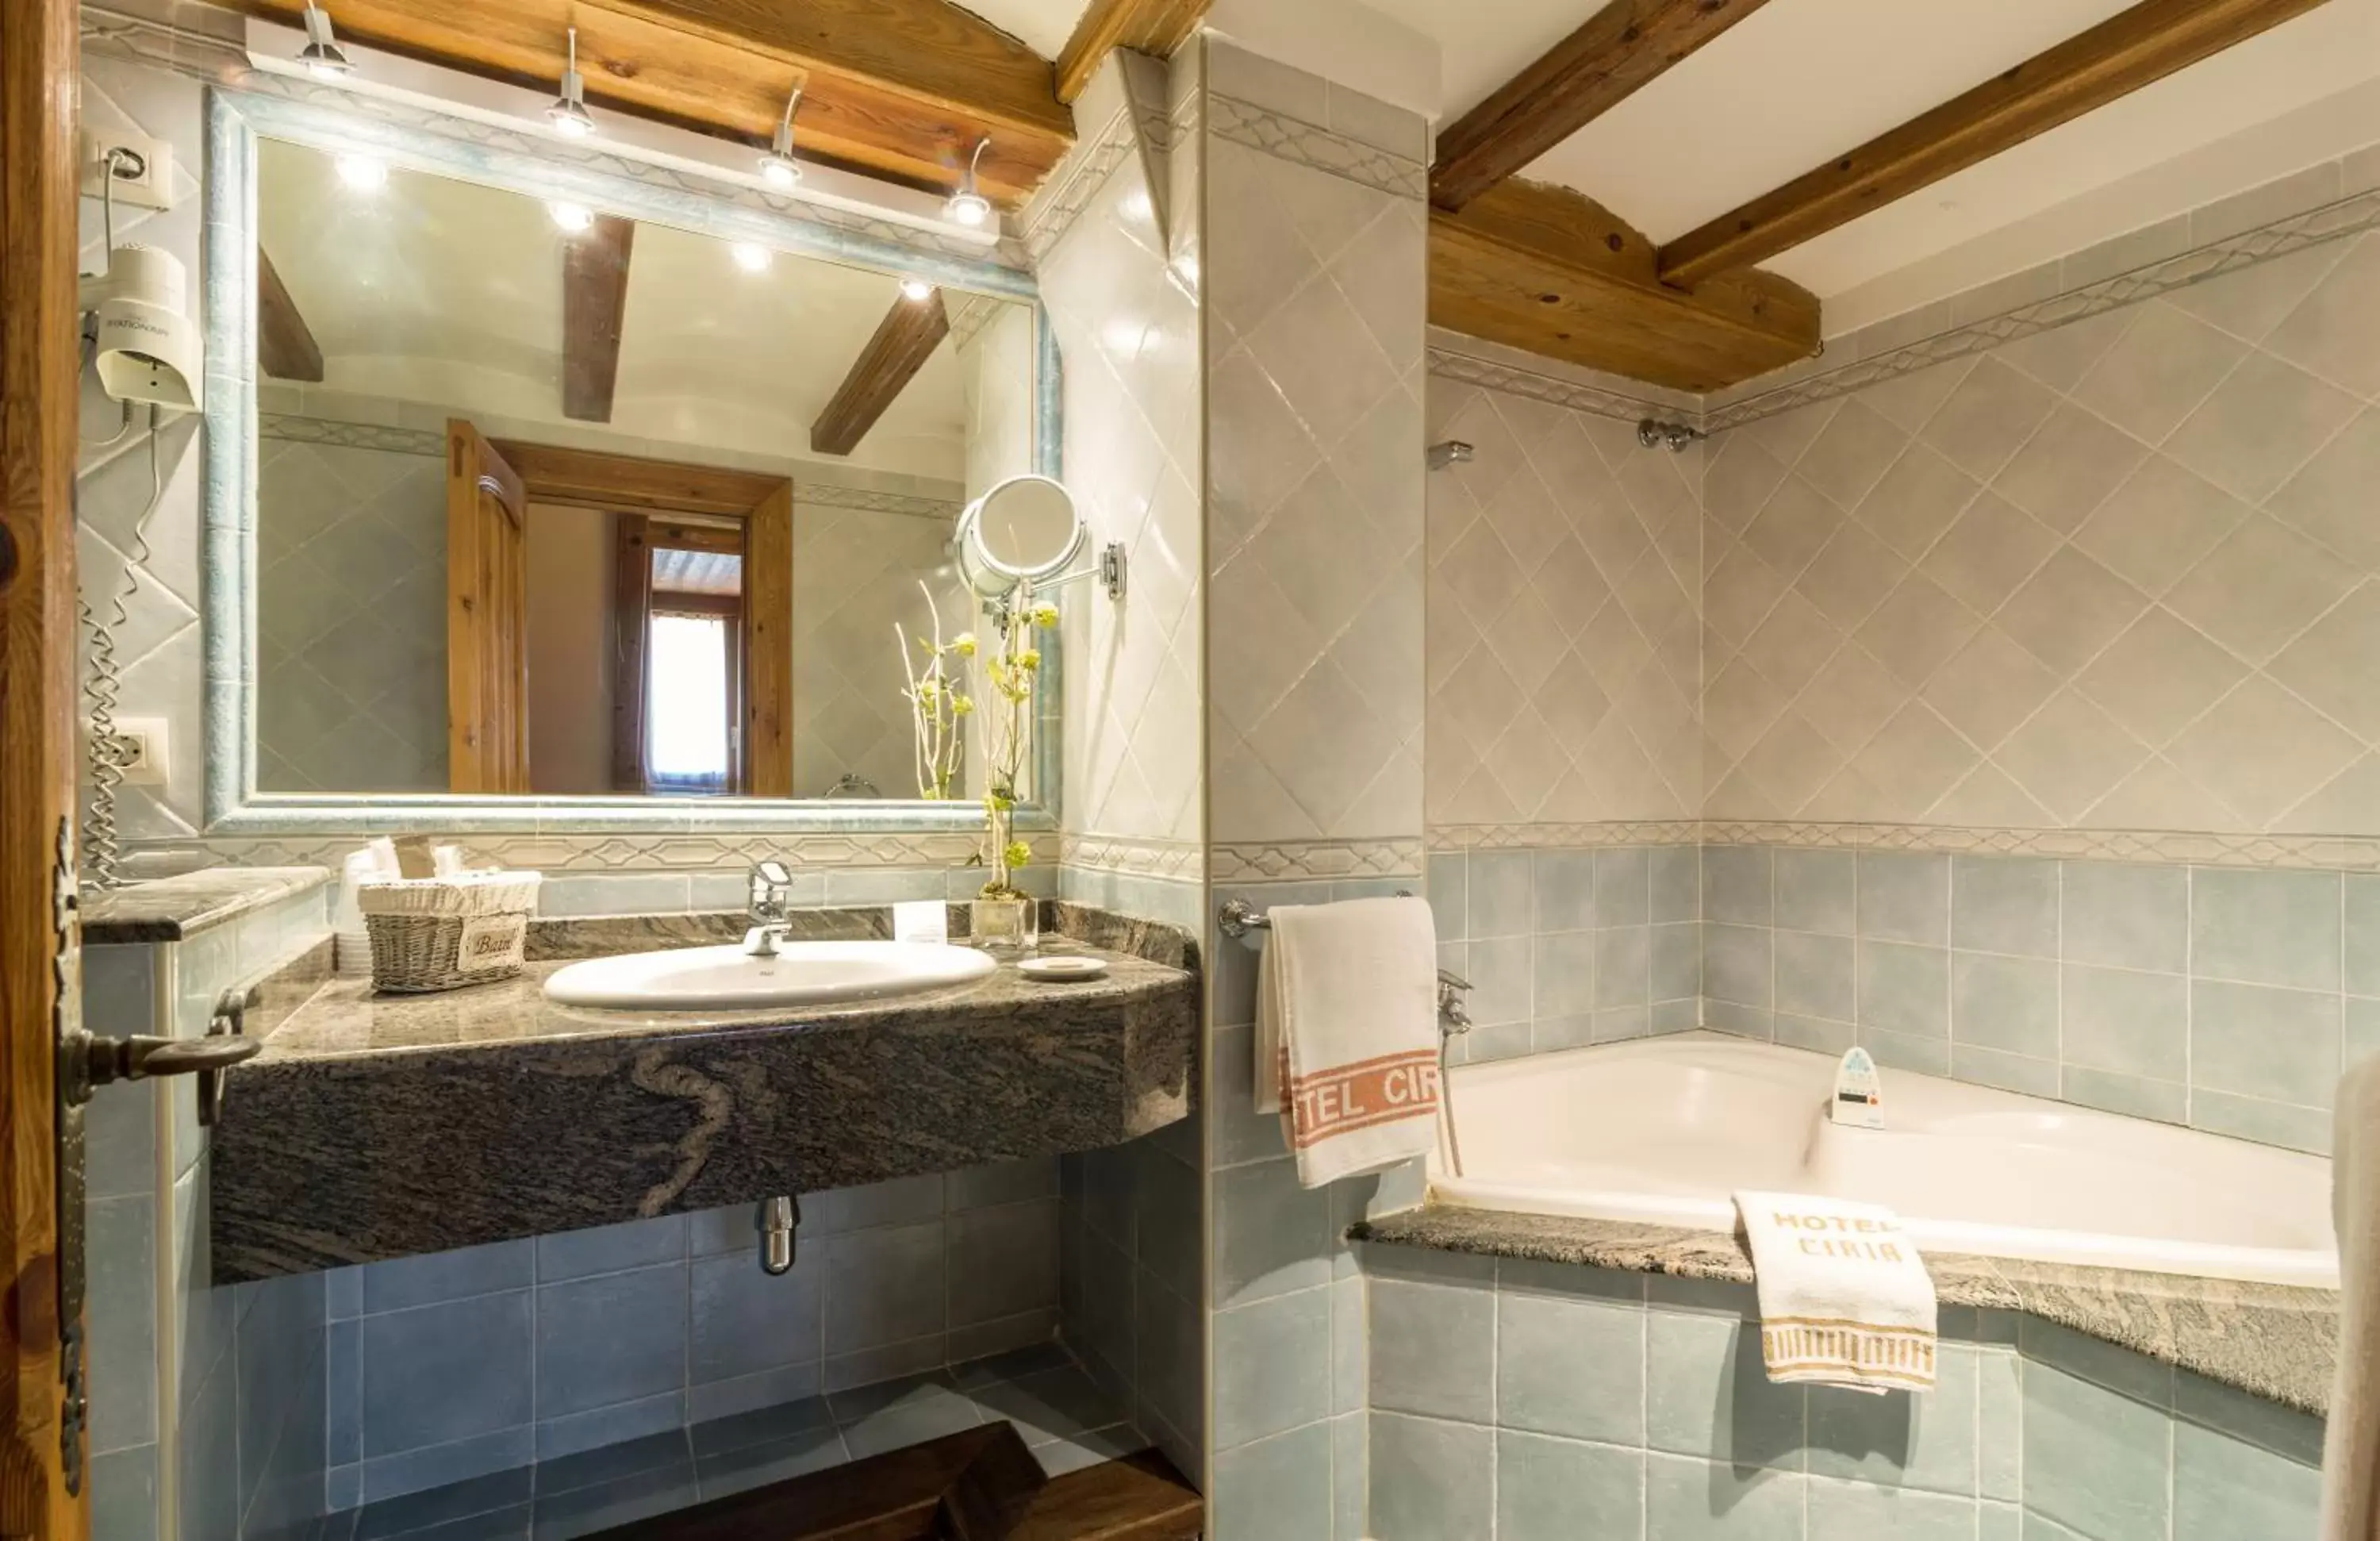 Bathroom in Hotel Ciria